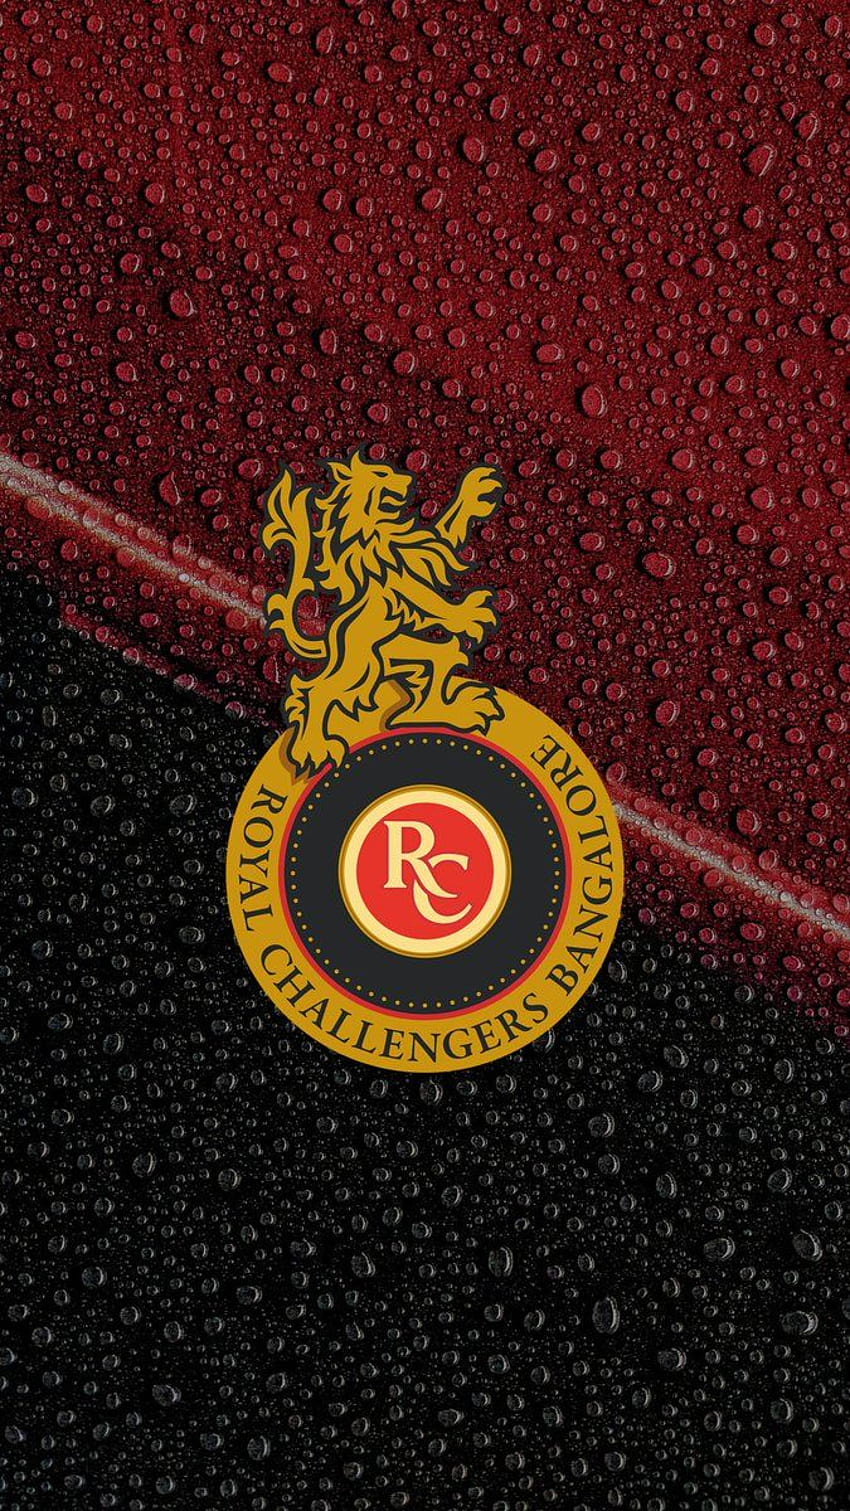 Royal Challengers Bangalore on X: 